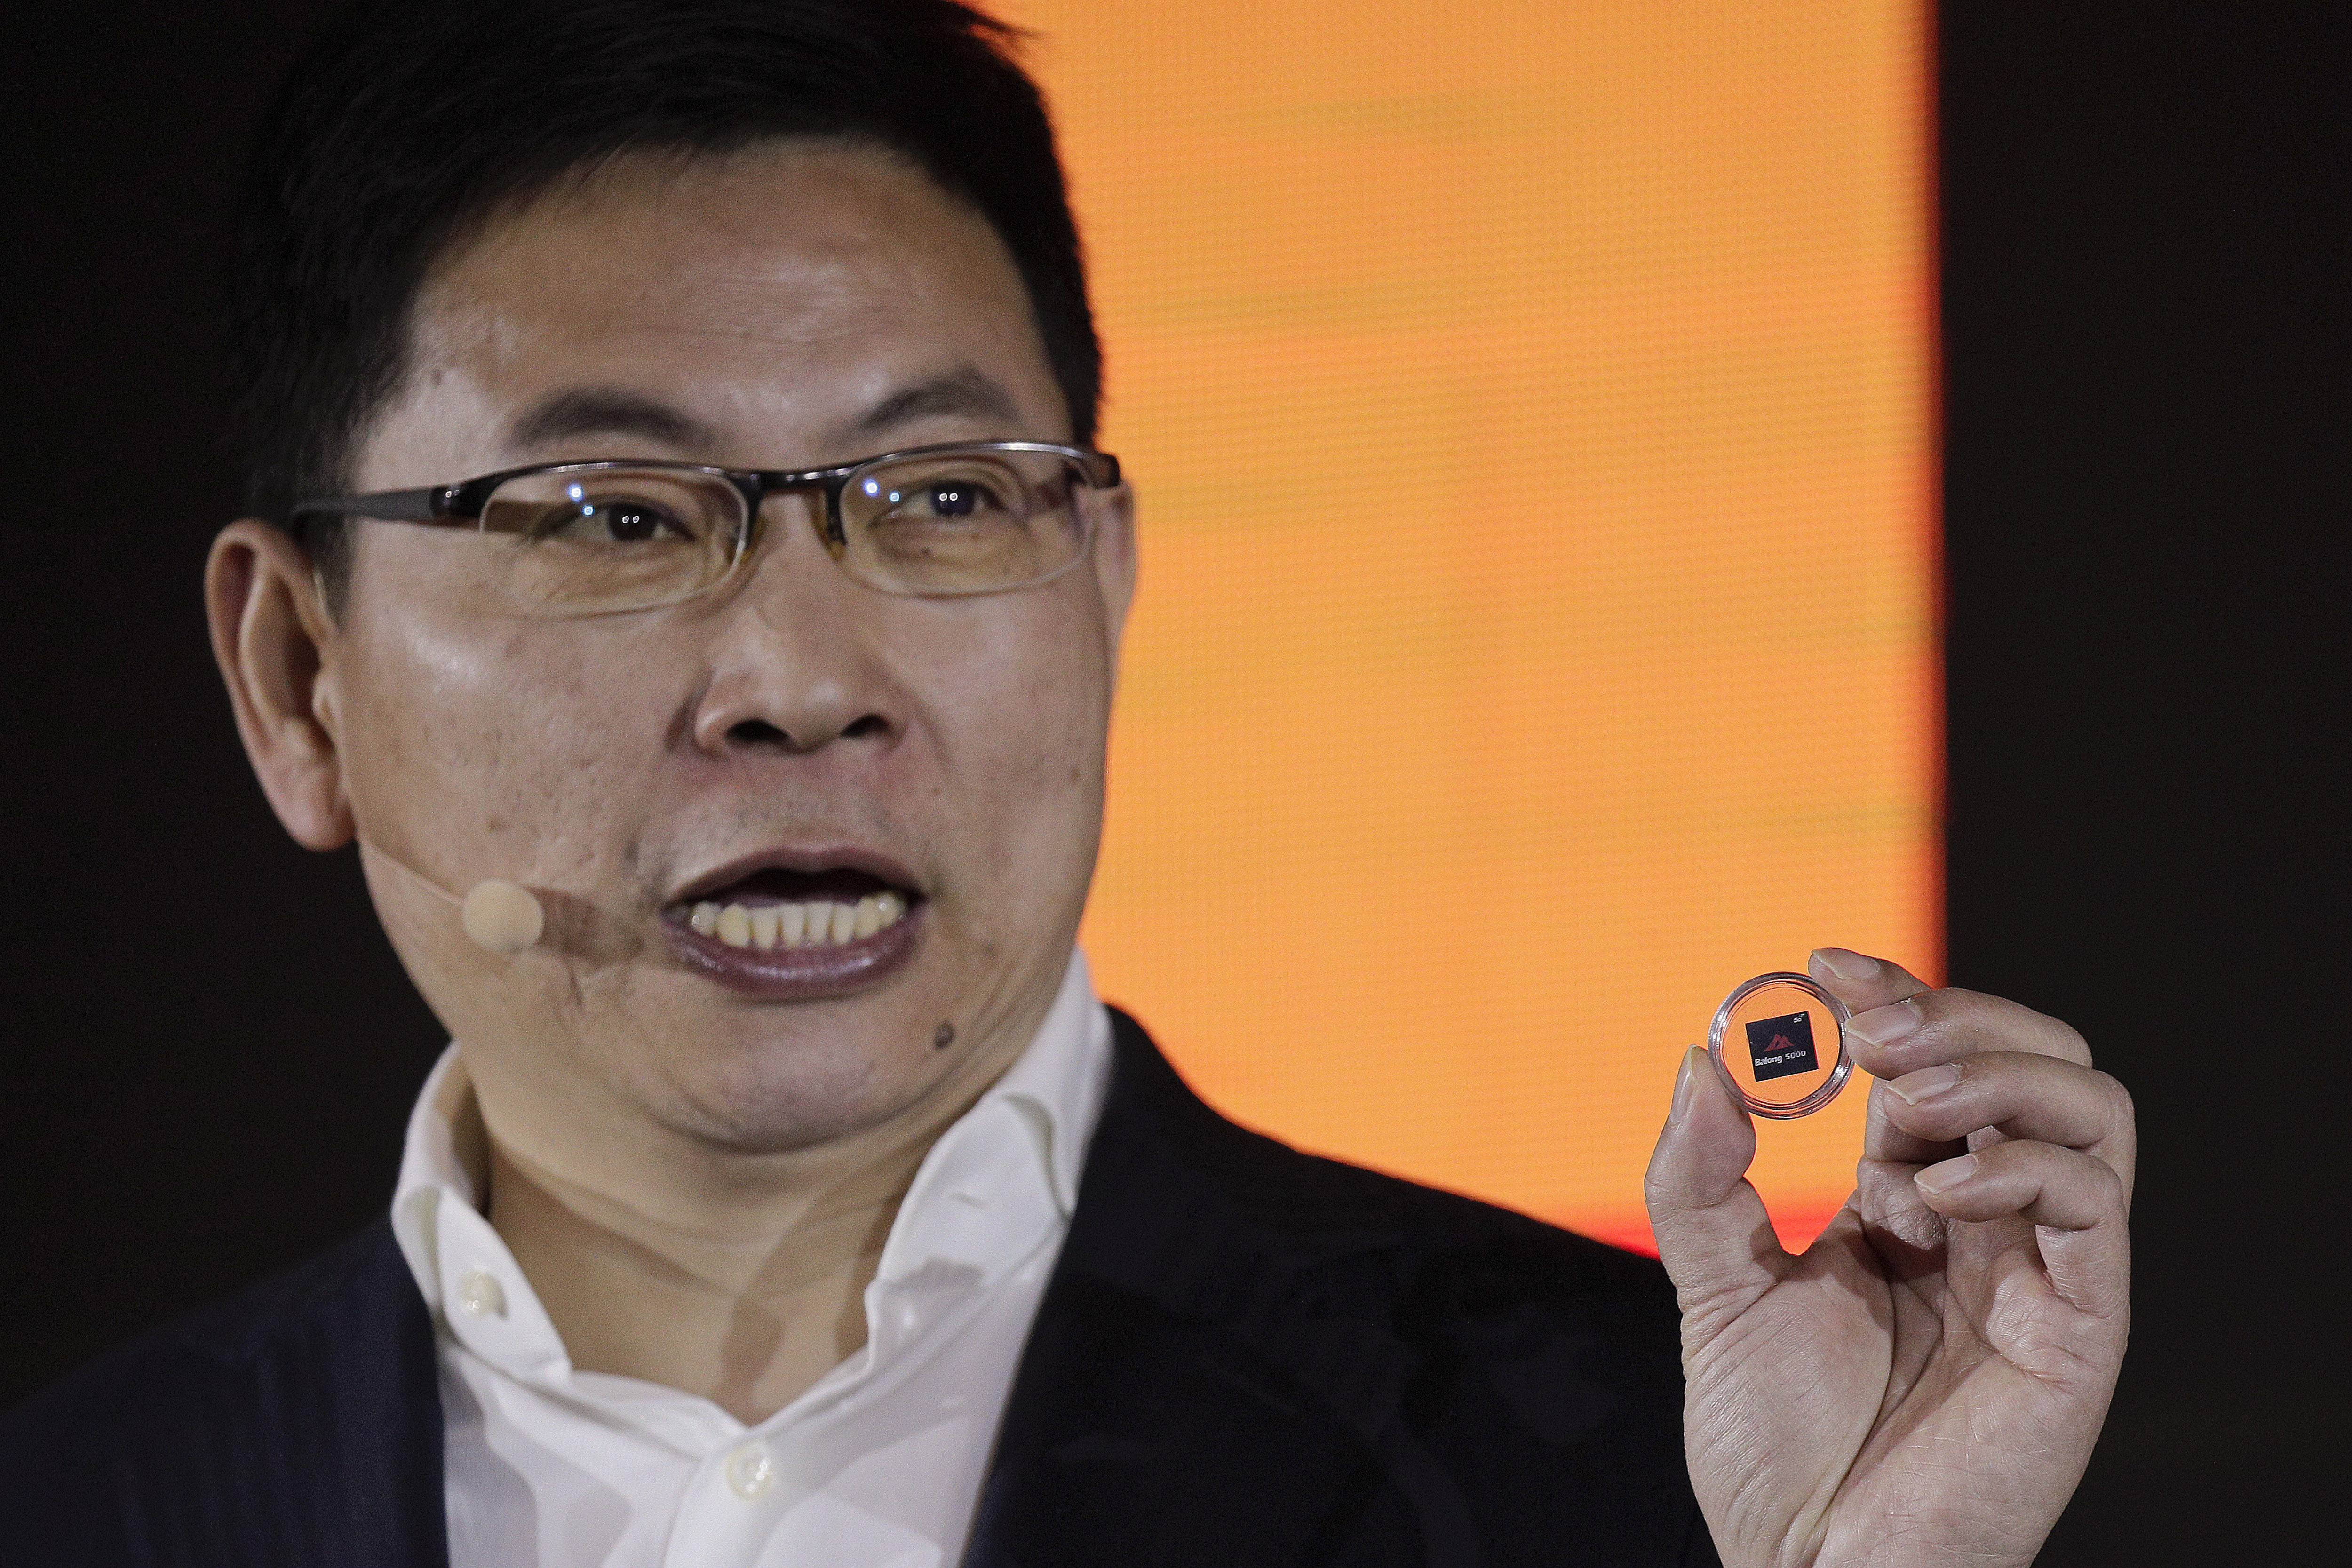 speed gun jammer doors , Huawei Announces 5G Smartphone Based on Own Technology